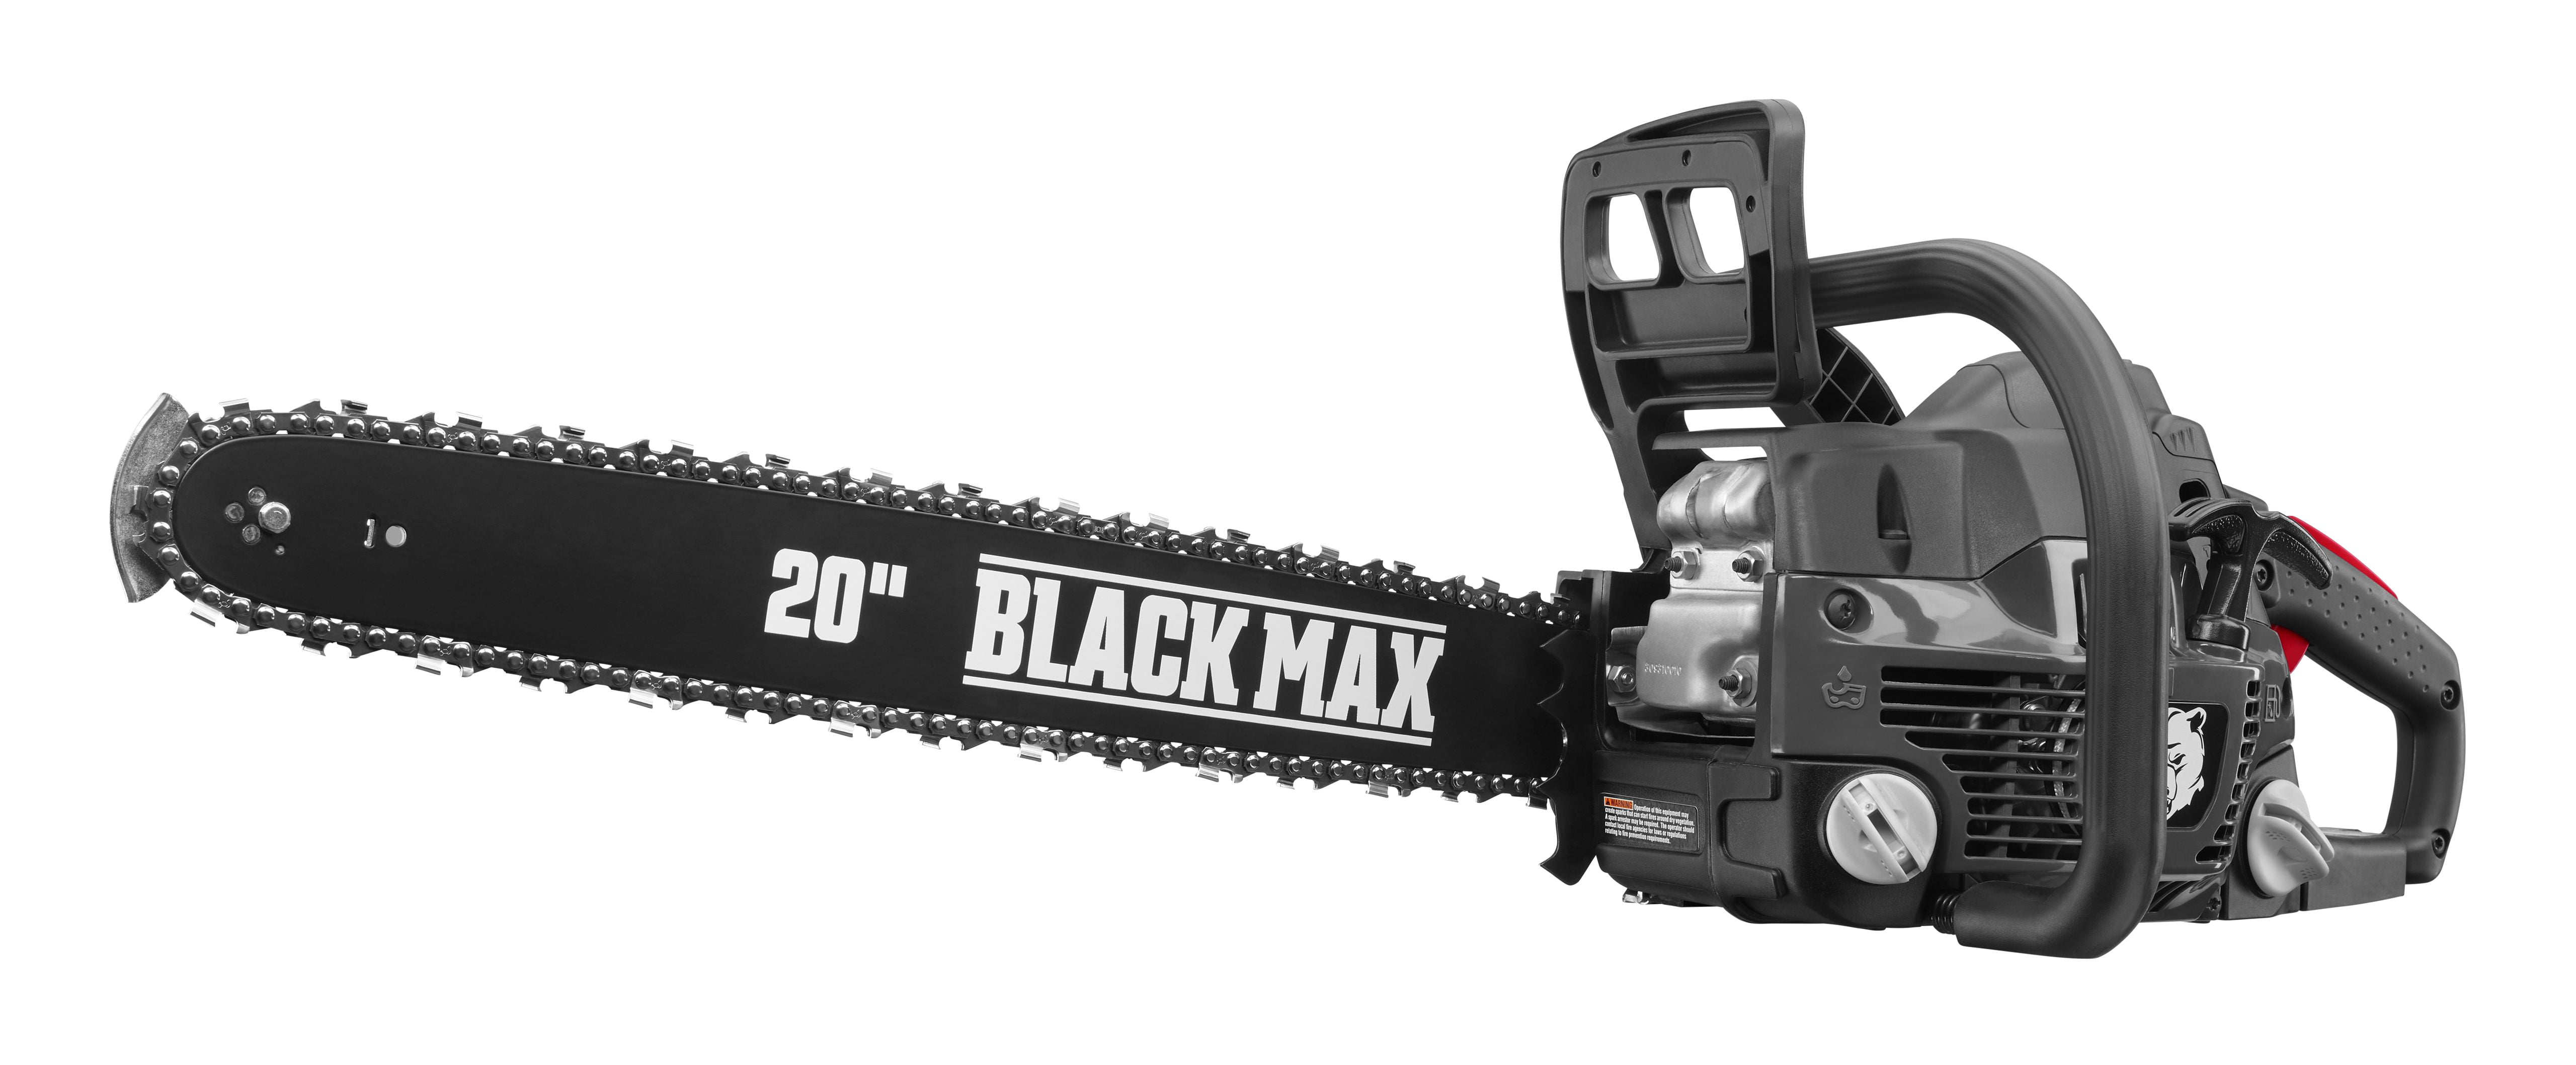 Black Max 20-inch Gas Chainsaw 50cc 2-Cycle Engine